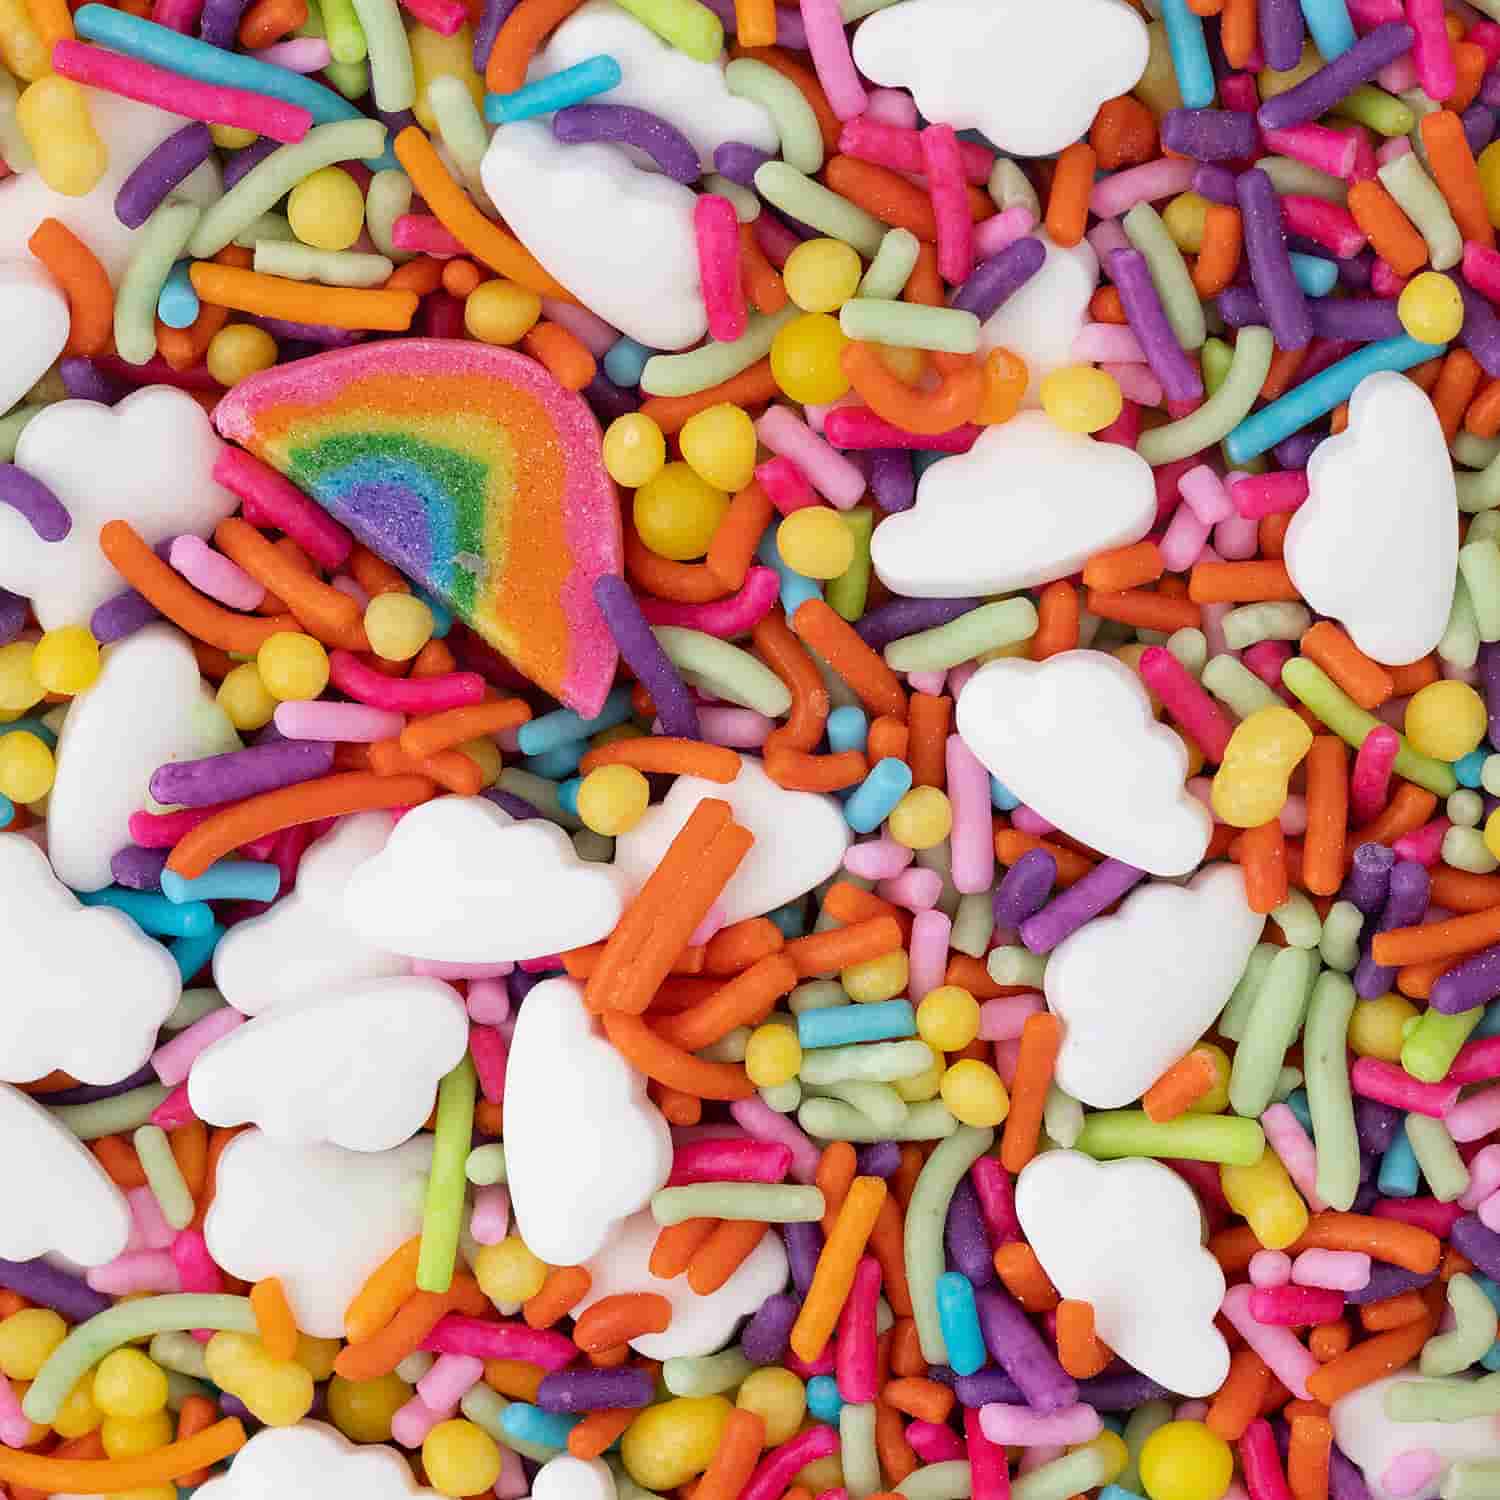 Rainbow Sprinkles Mix  Country Kitchen SweetArt